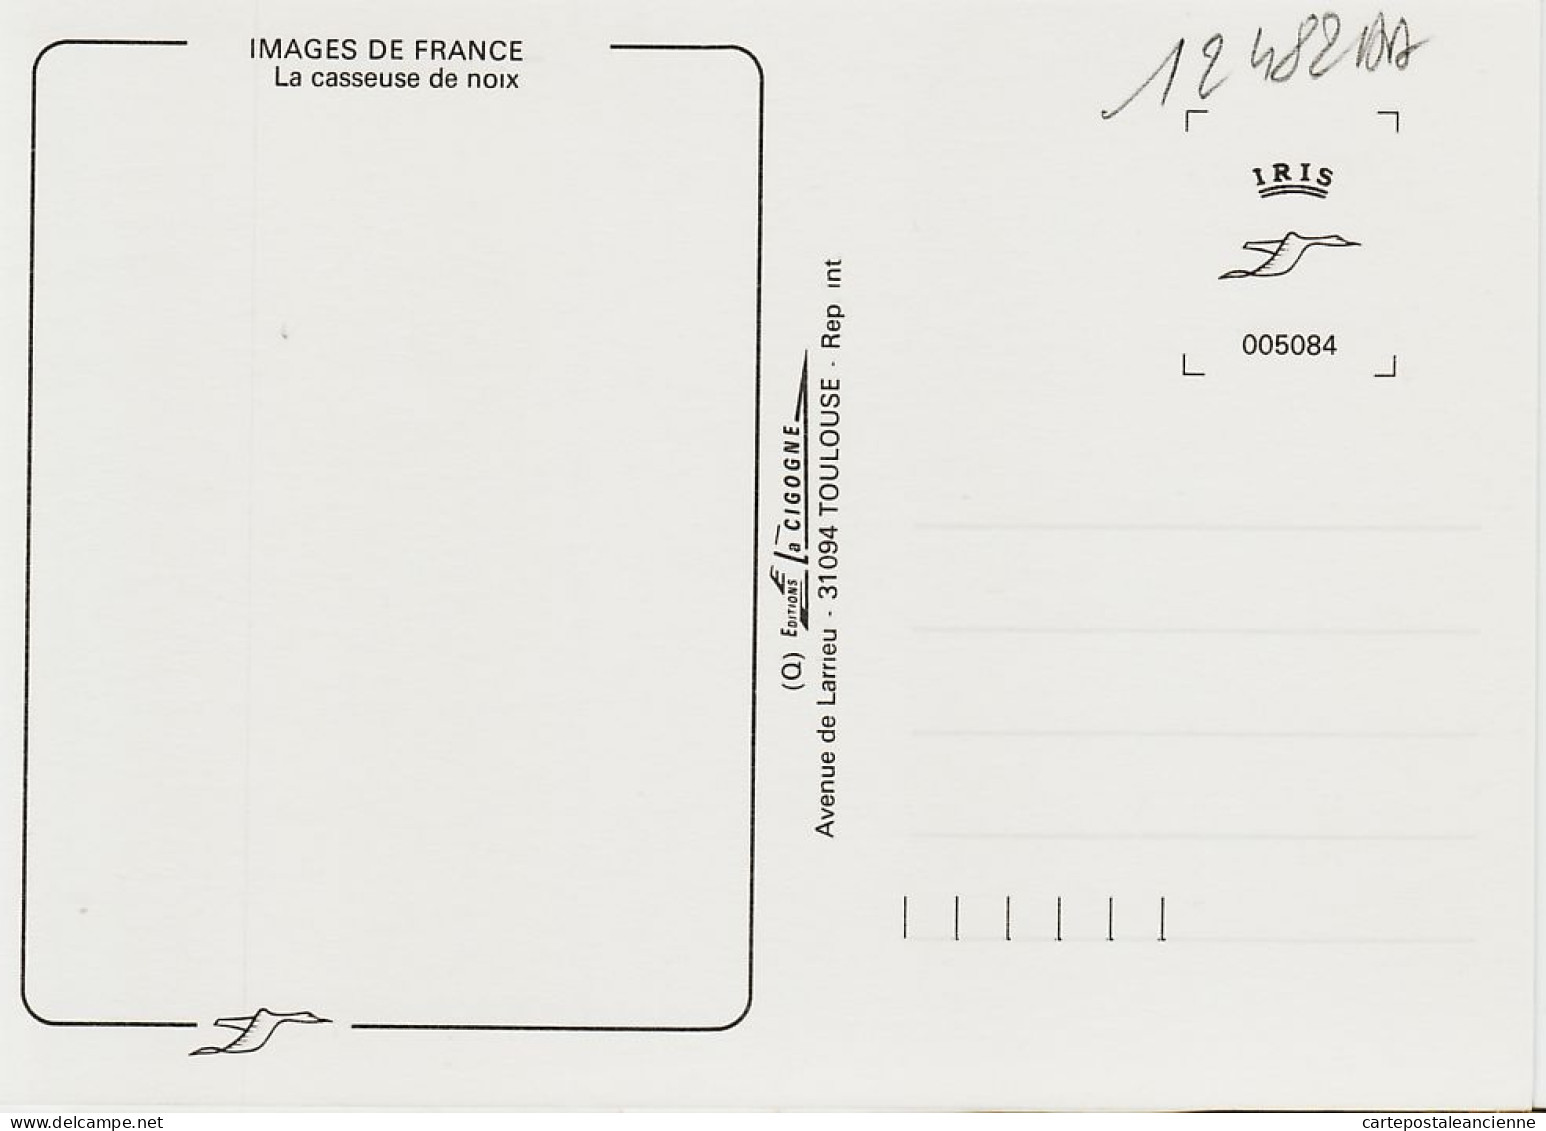 05454 / Midi Pyrénées La CASSEUSE De NOIX Metier Paysanne Marteau Ardoise Atre Cheminee 1985s - IRIS CIGOGNE - Farmers